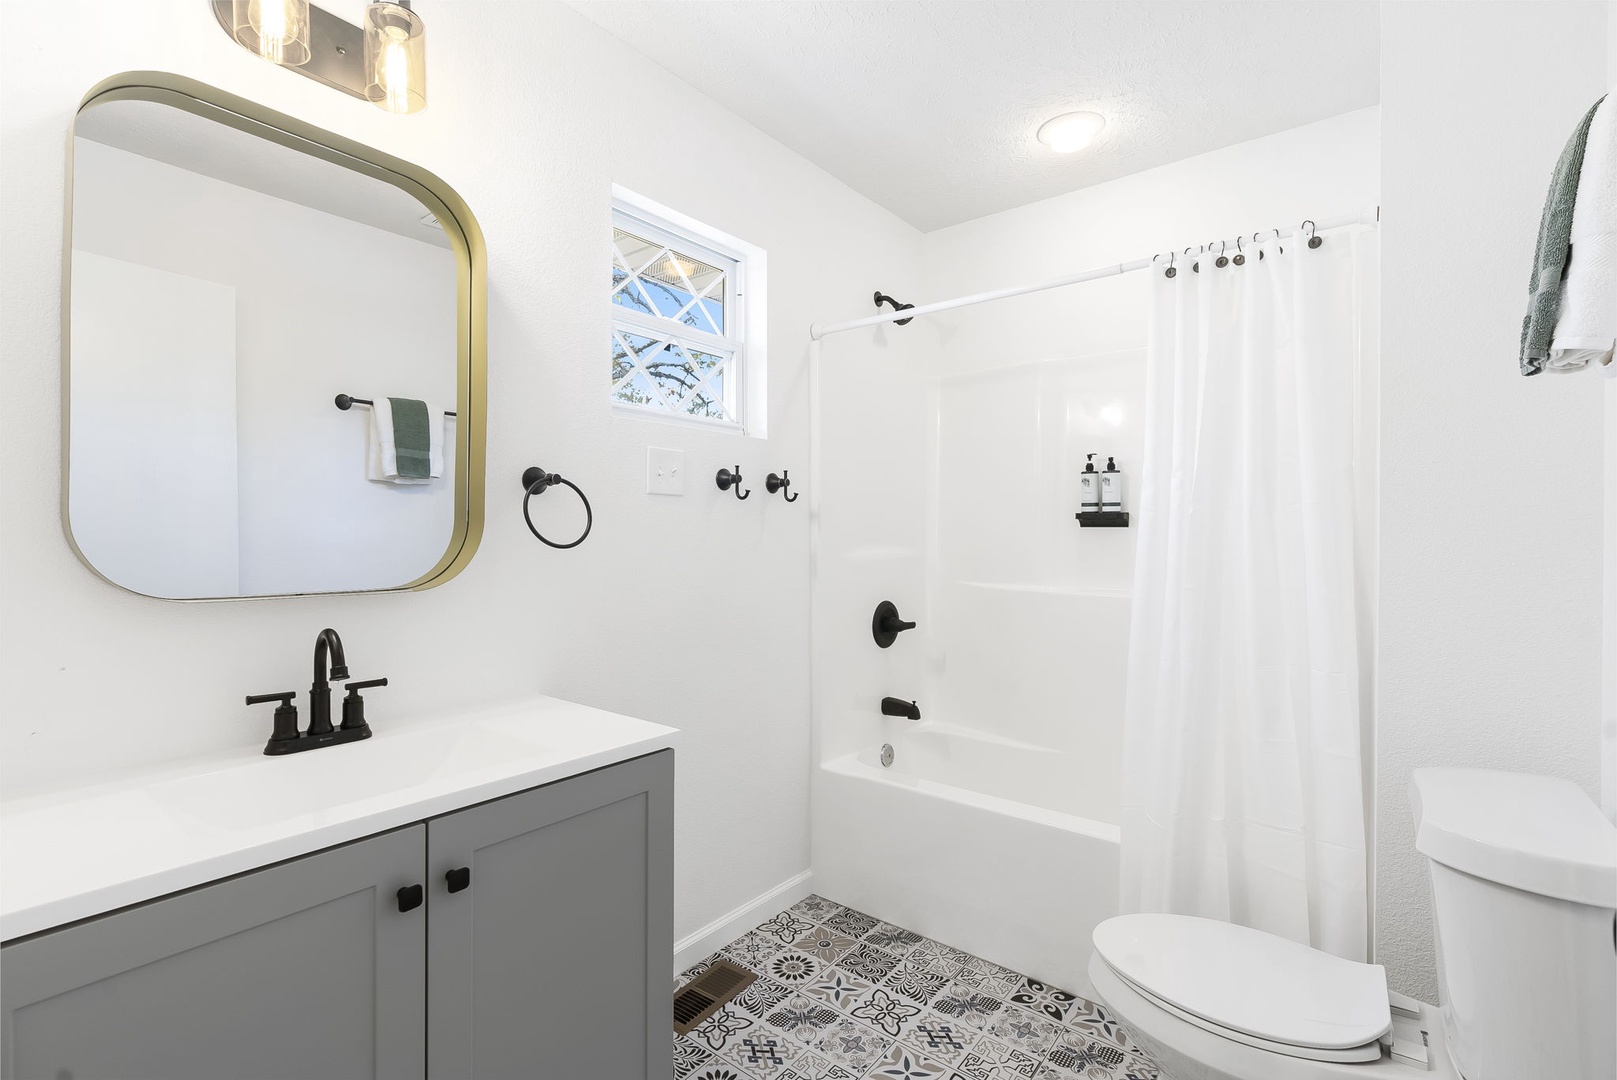 This 2nd floor en suite offers a single vanity & shower/tub combo